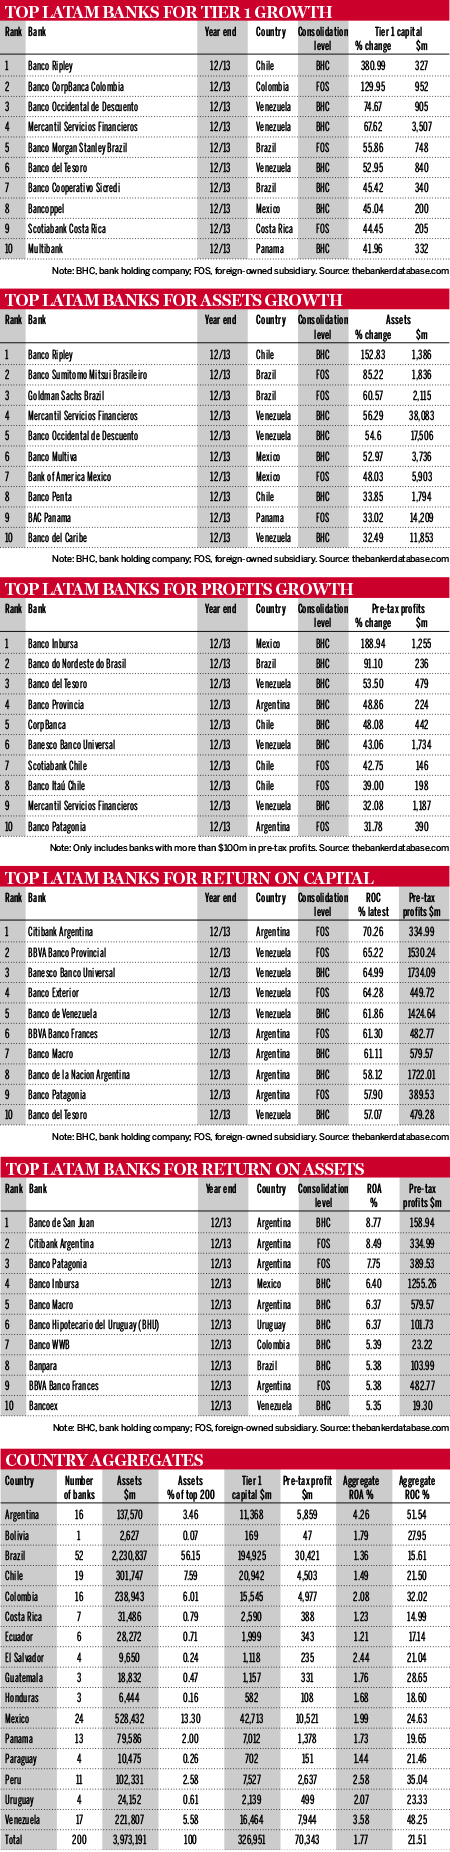 Top Latam banks ranking